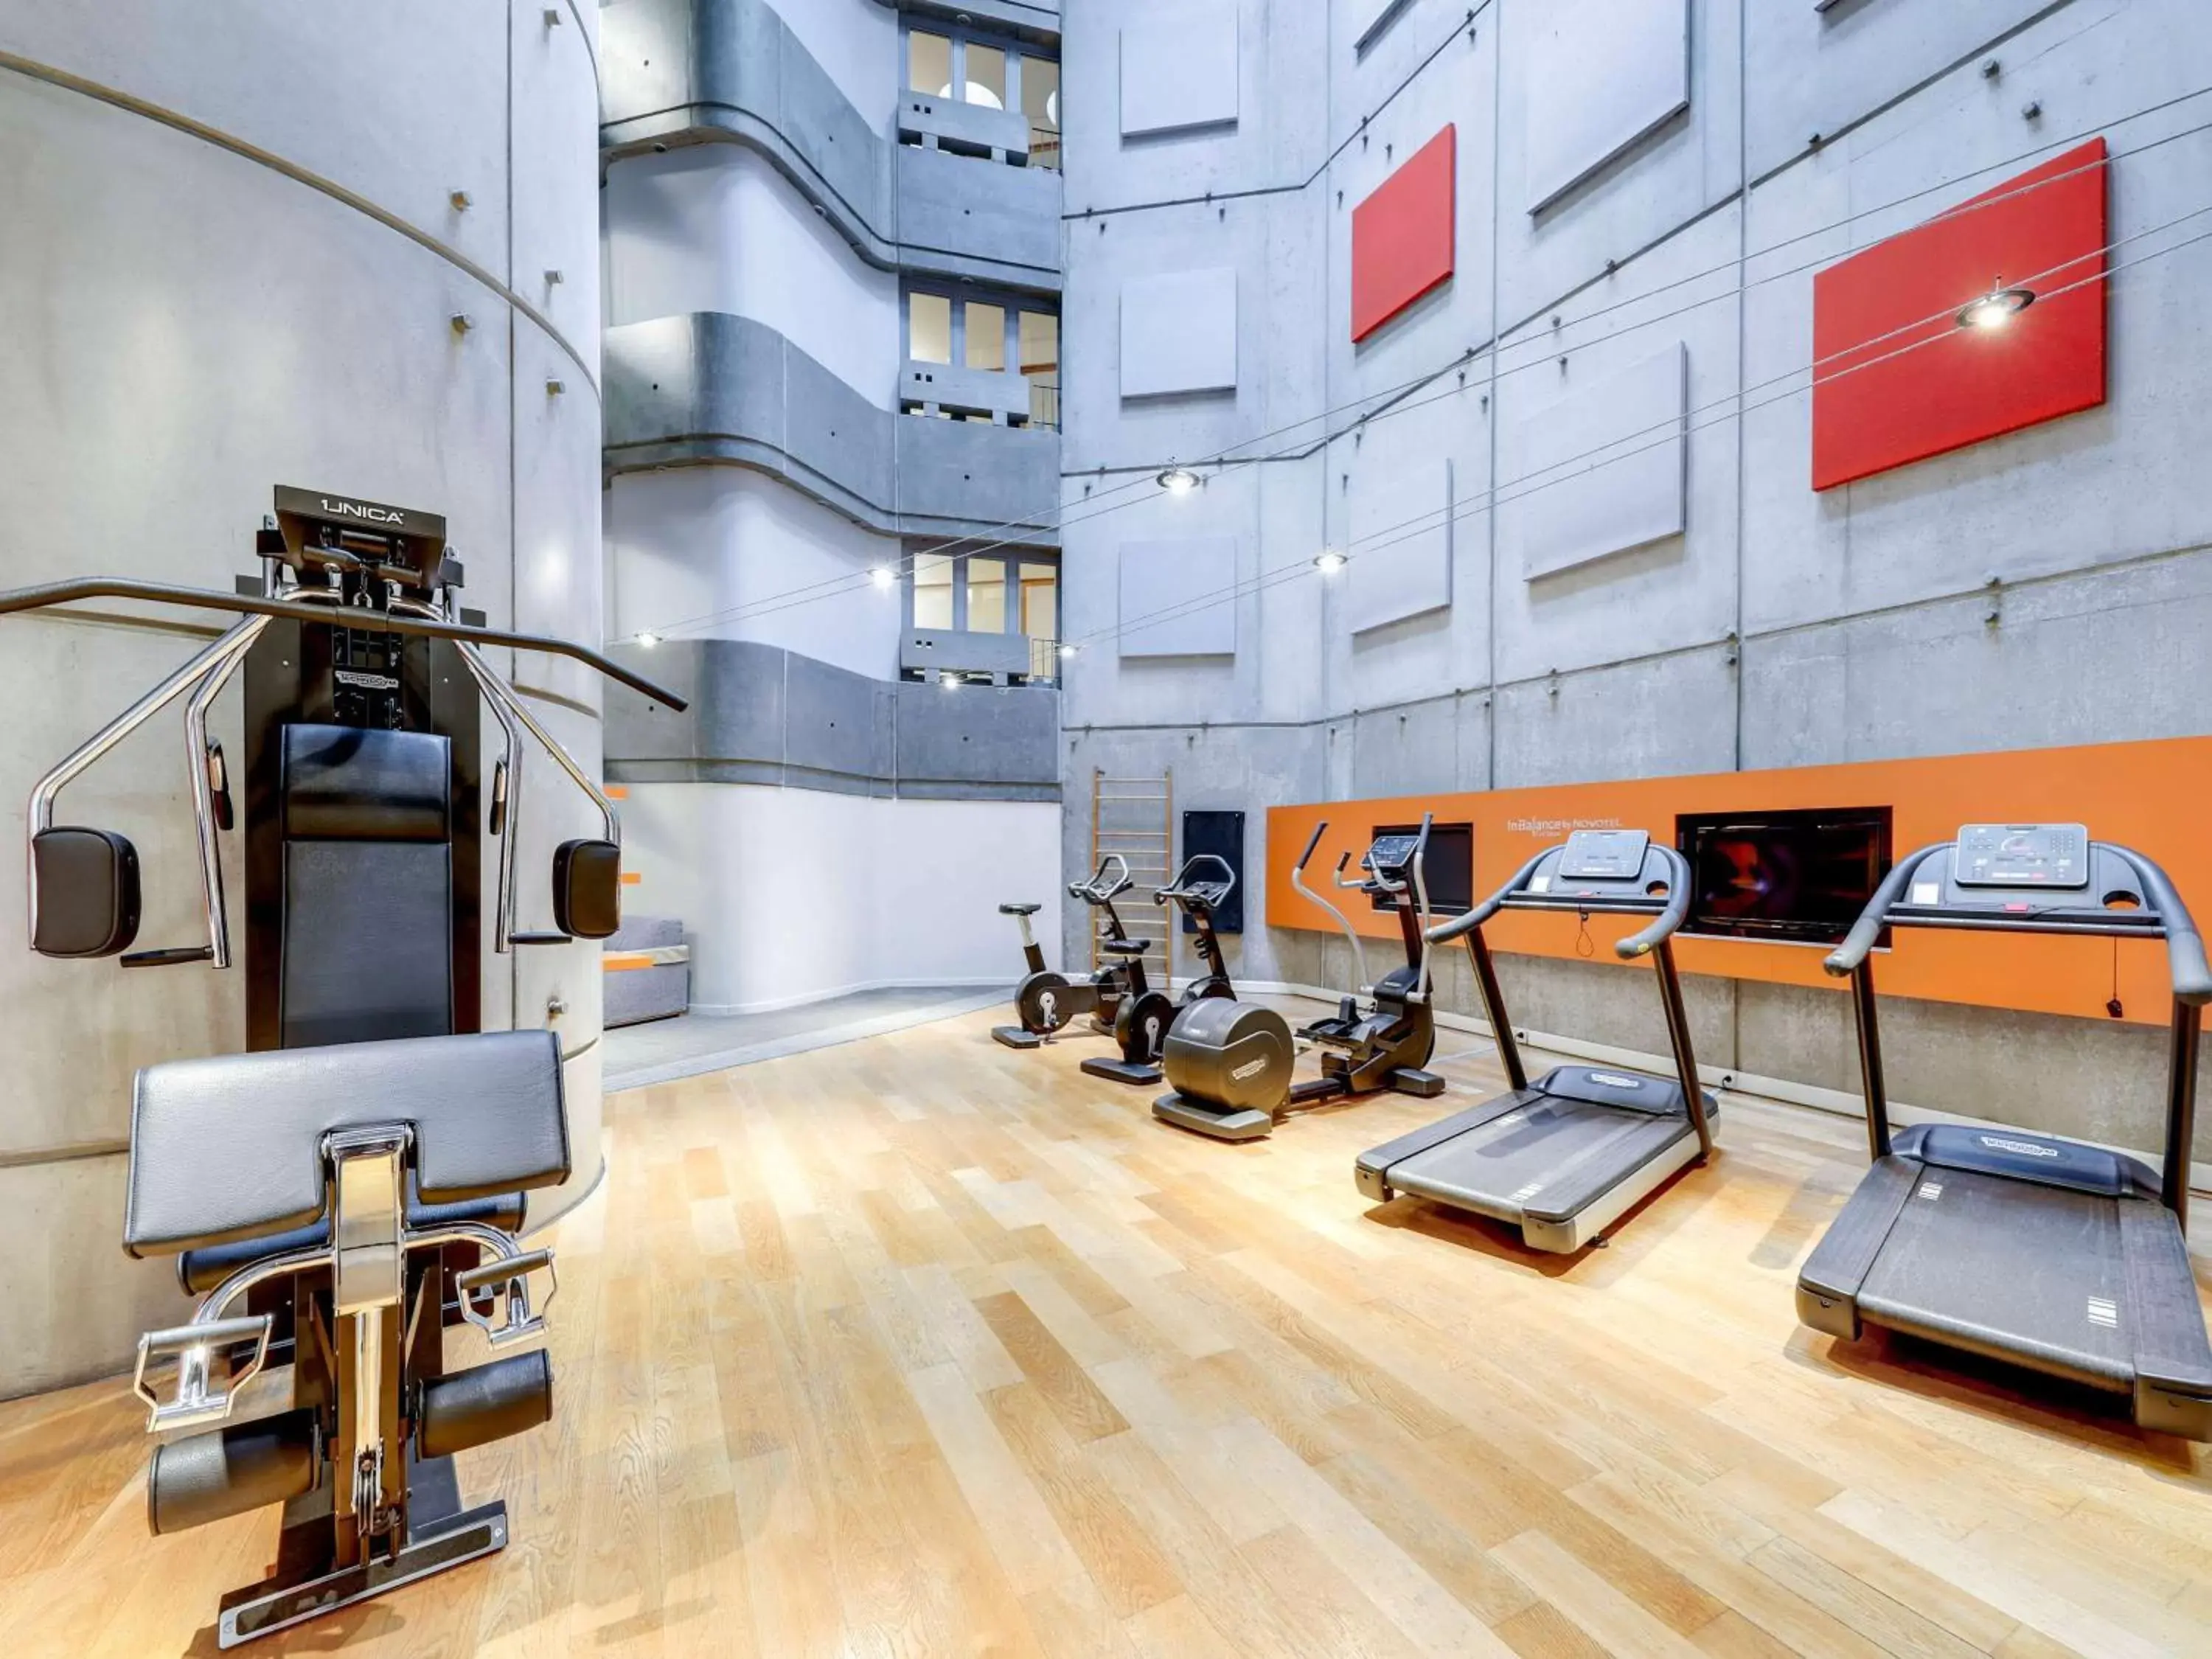 Fitness centre/facilities, Fitness Center/Facilities in Novotel Paris Gare De Lyon